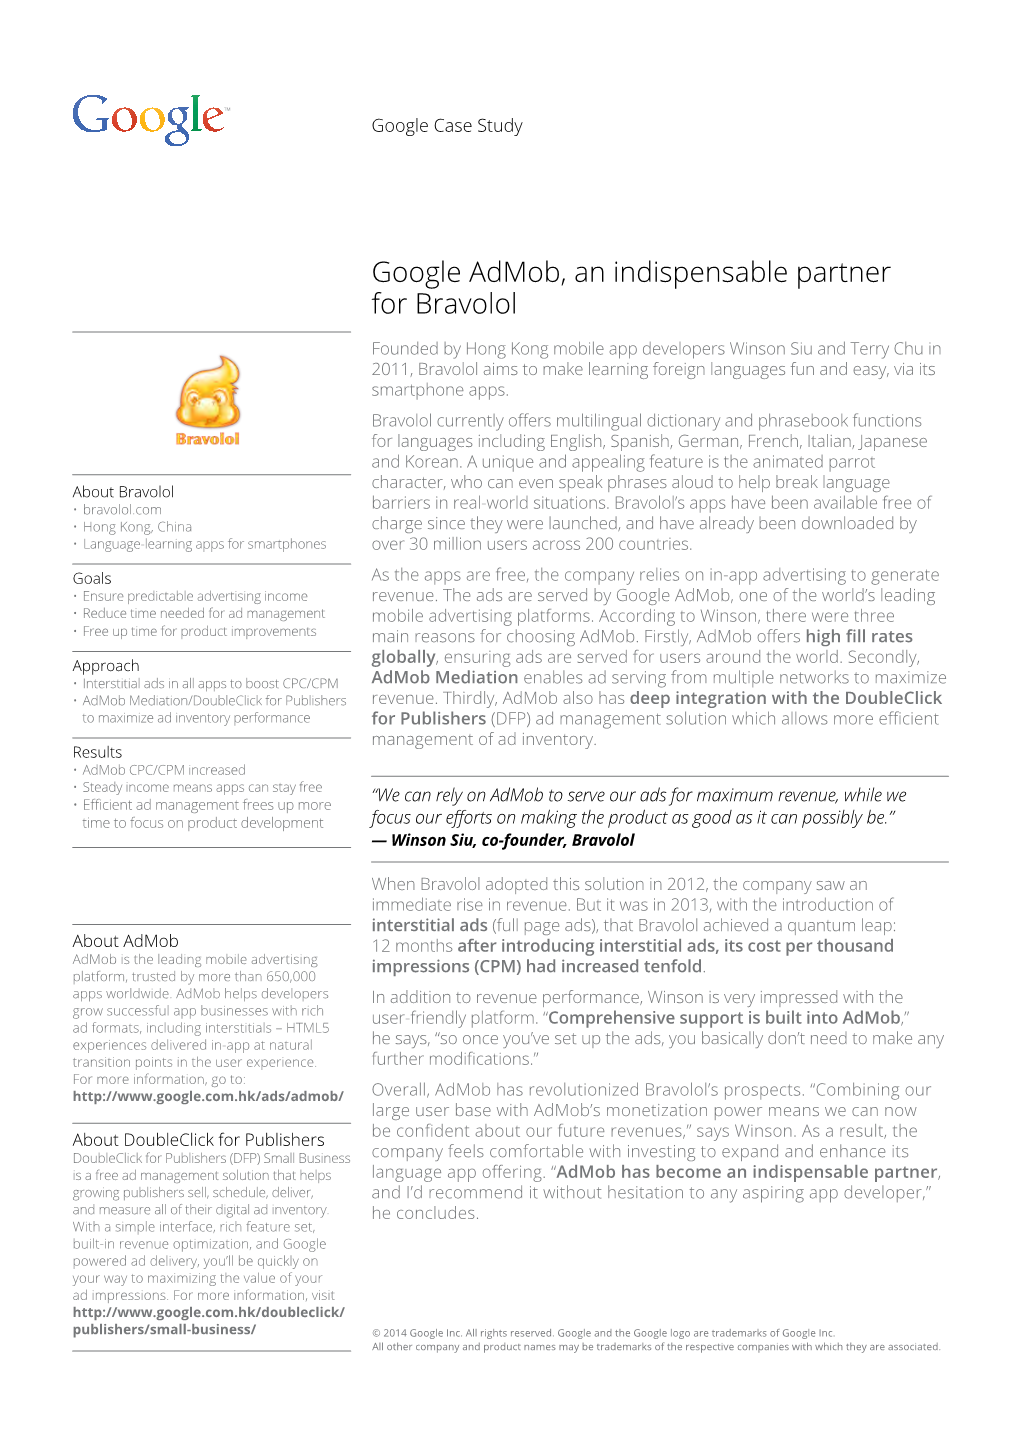 Google Admob, an Indispensable Partner for Bravolol